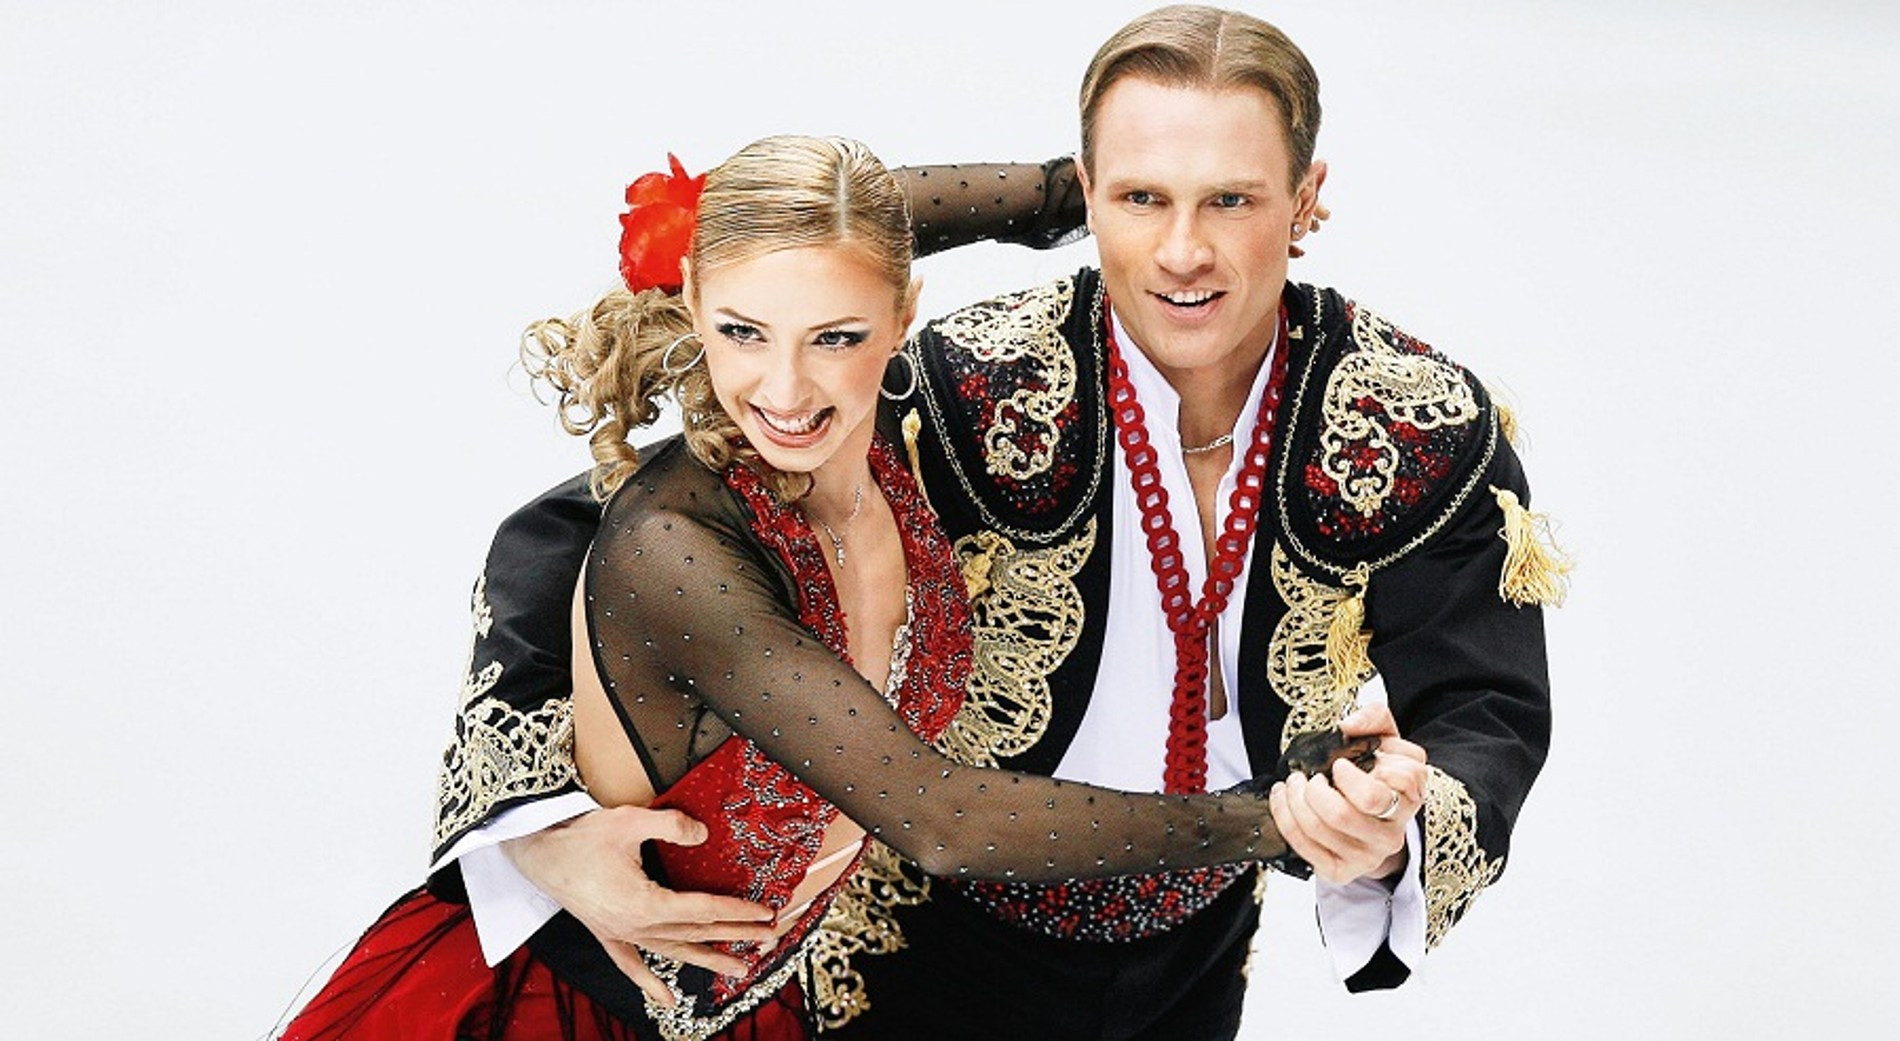 Роман Костомаров и Татьяна Навка
Фото: Чемпионат